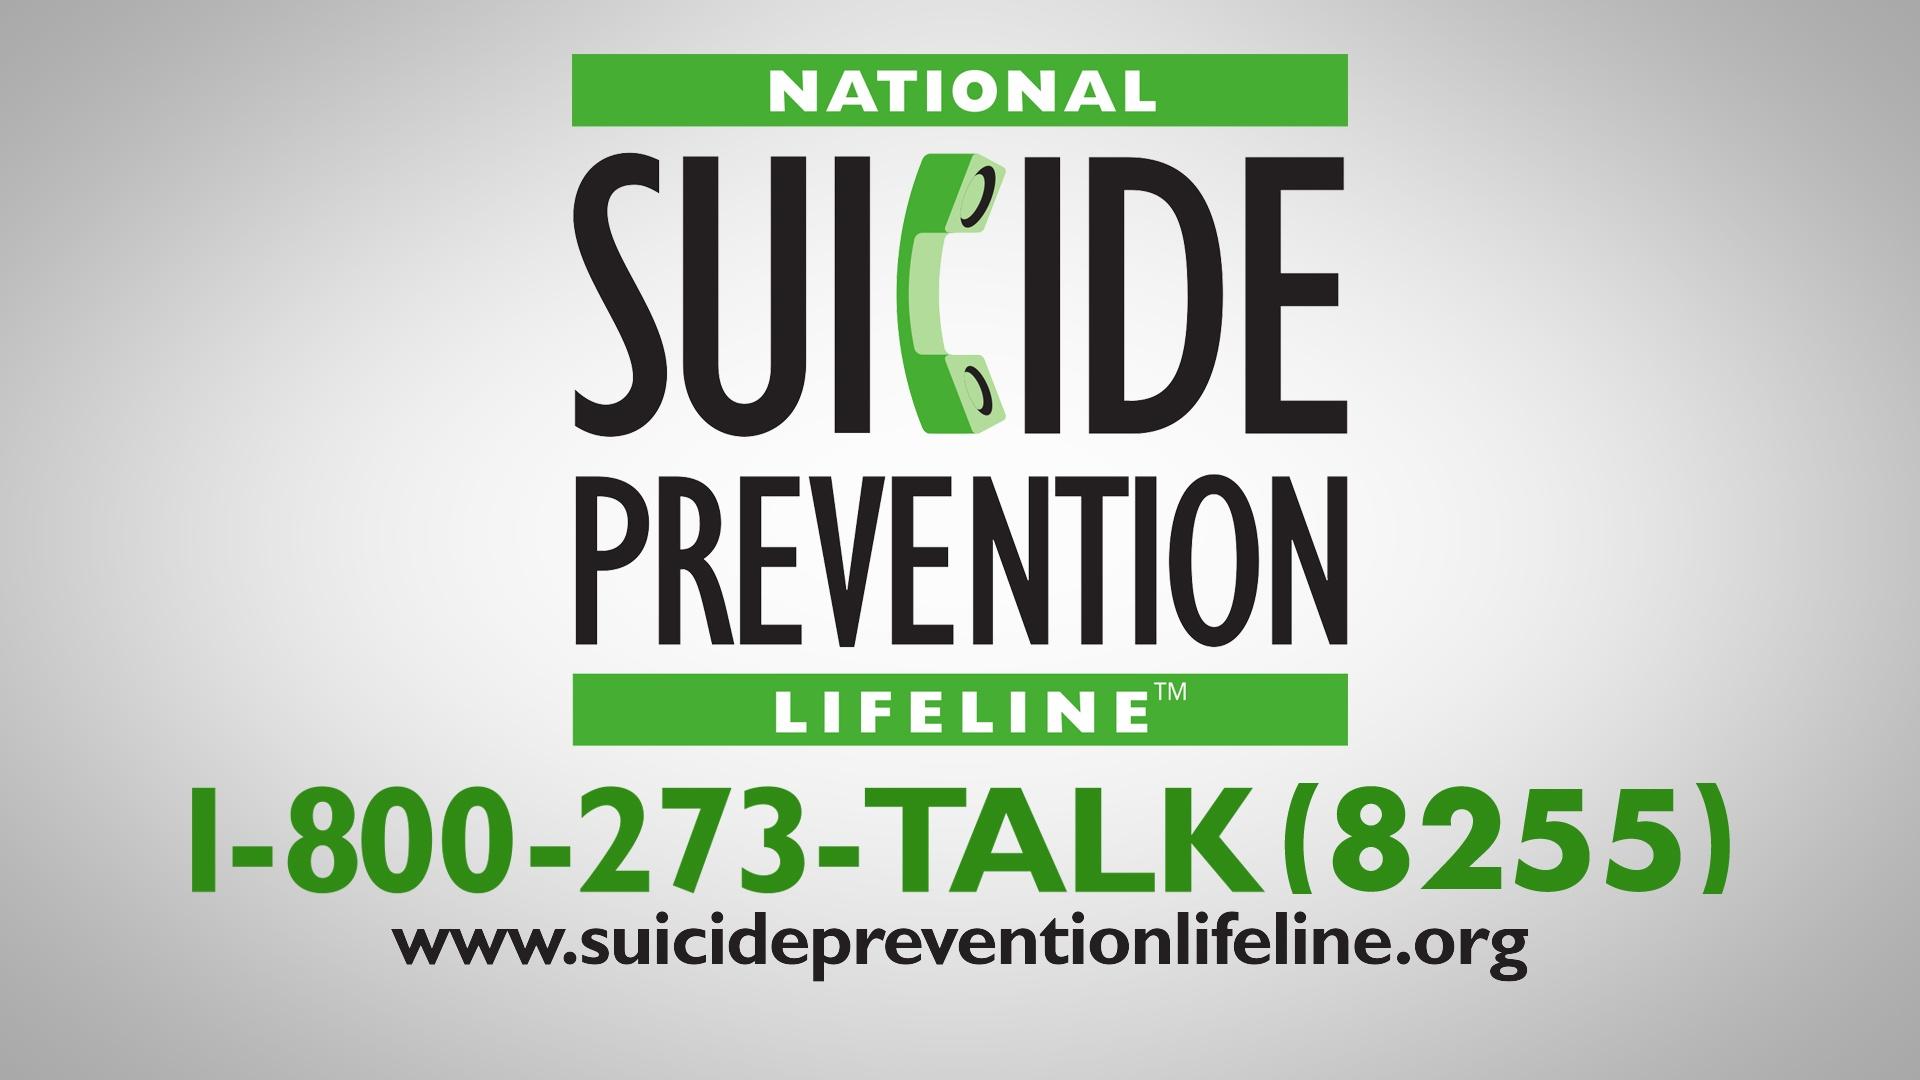 Suicide Prevention Lifeline 1-800-273-8255